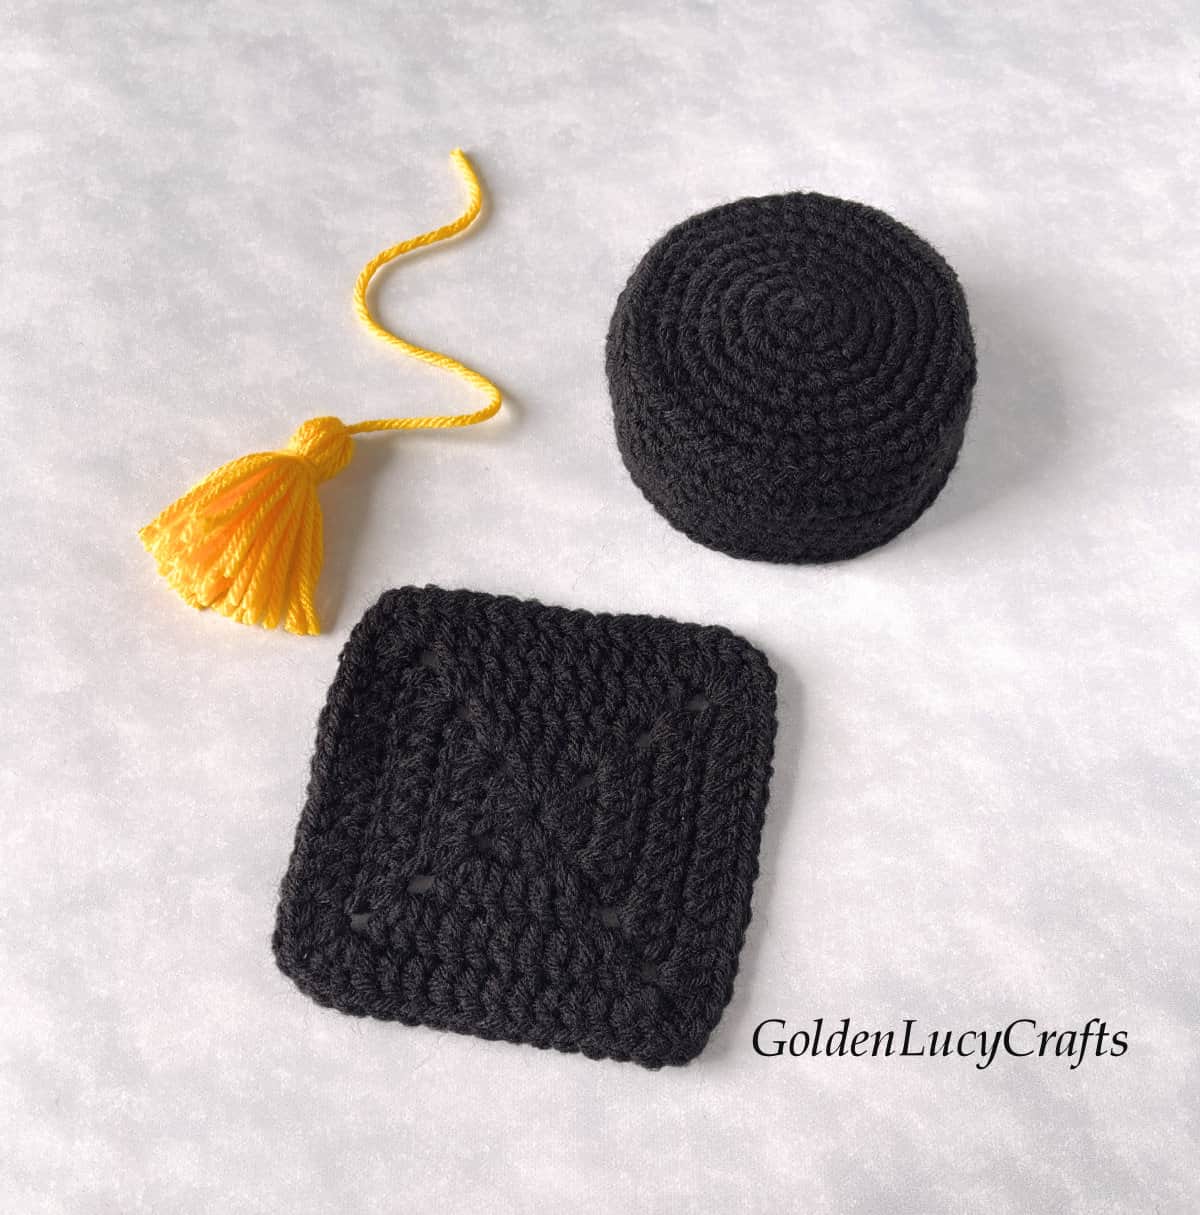 Patrs of crocheted graduation cap.